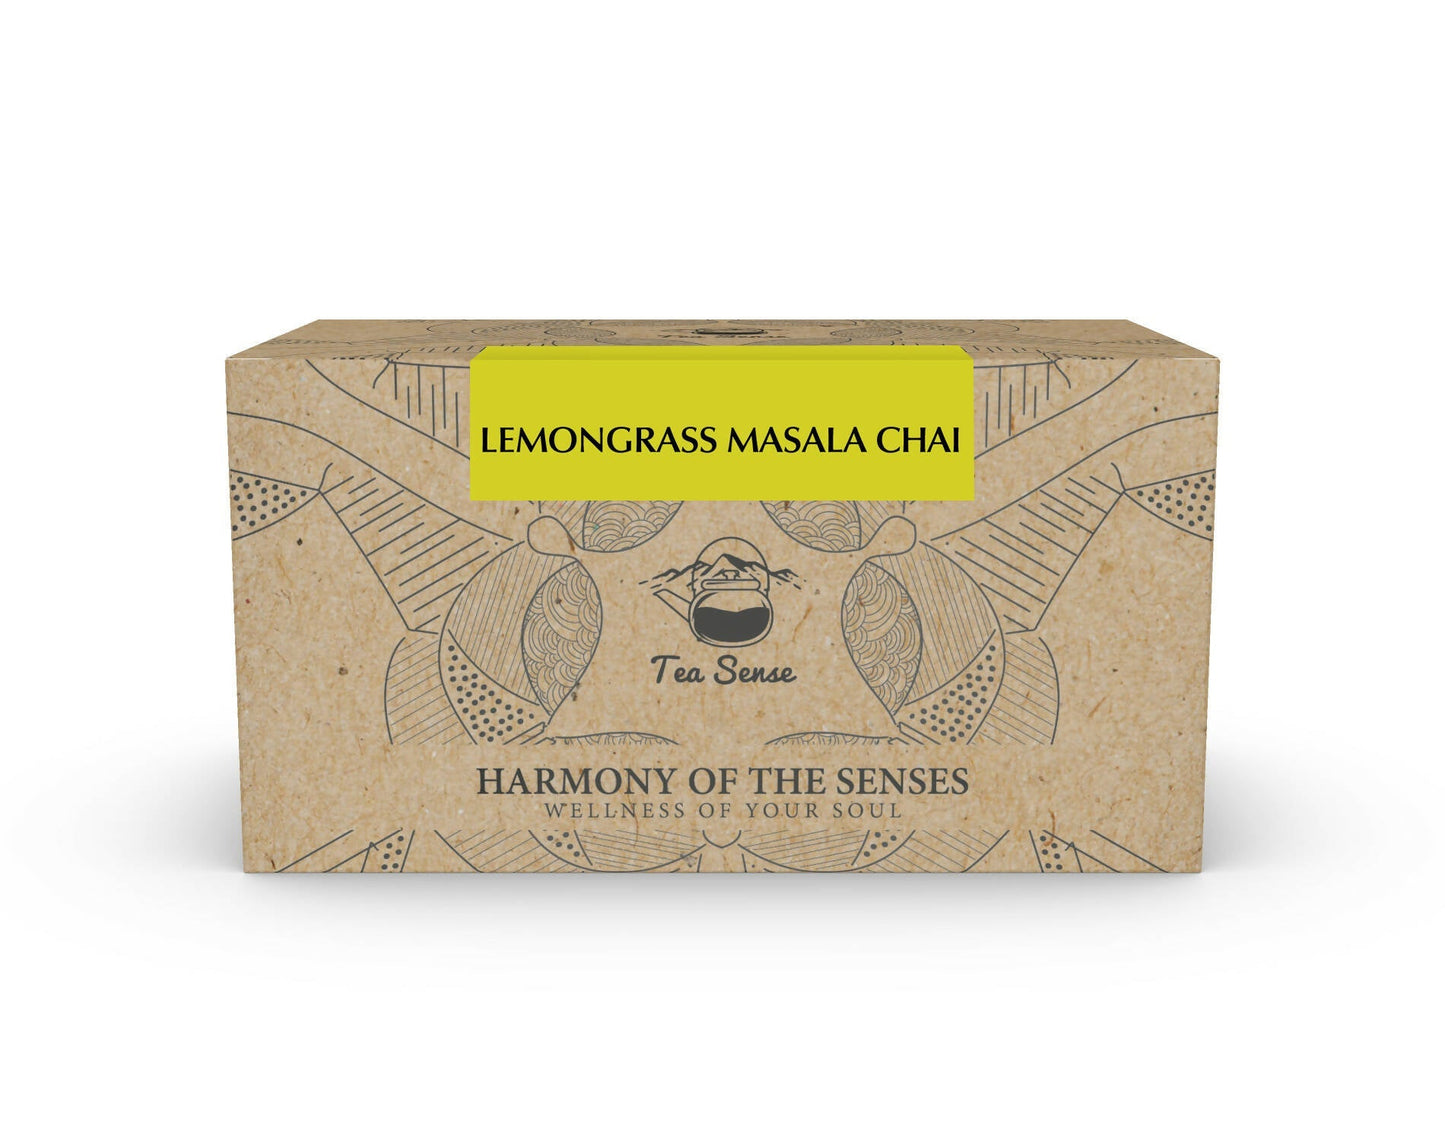 Tea Sense Lemongrass Masala Chai Bags Box - buy in USA, Australia, Canada